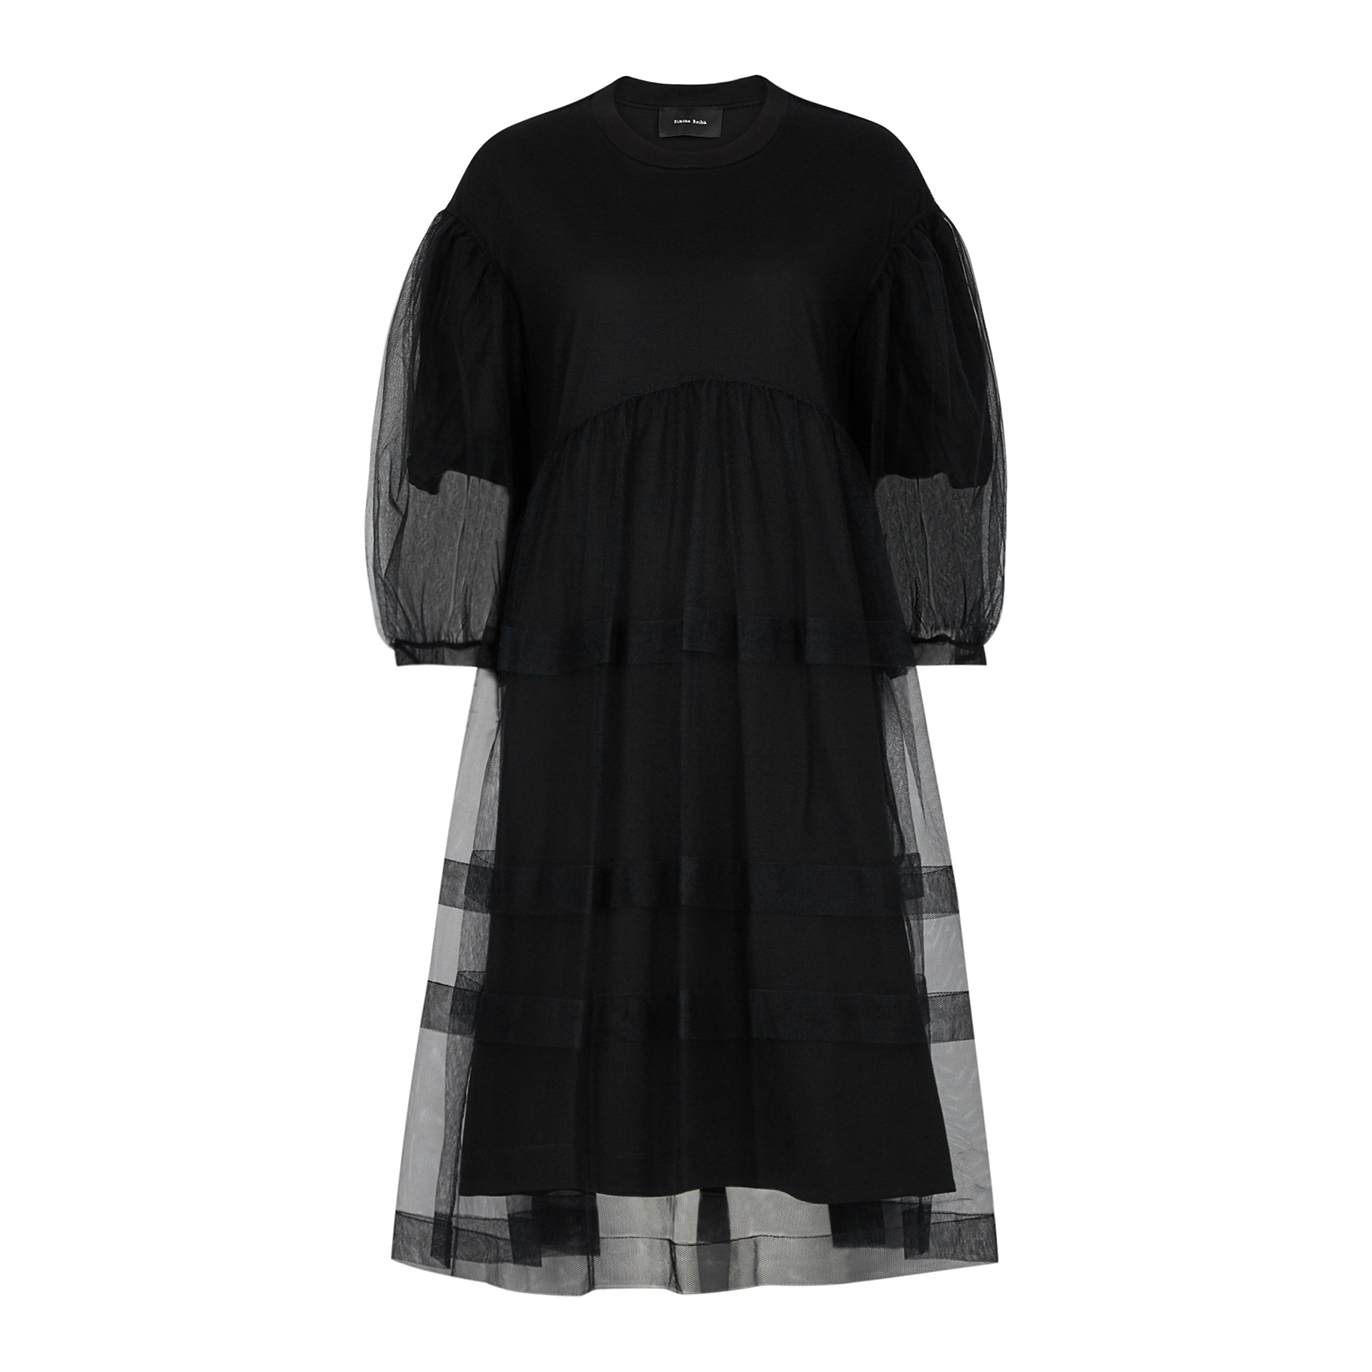 Simone Rocha Black Layered Cotton And Tulle Dress - 12